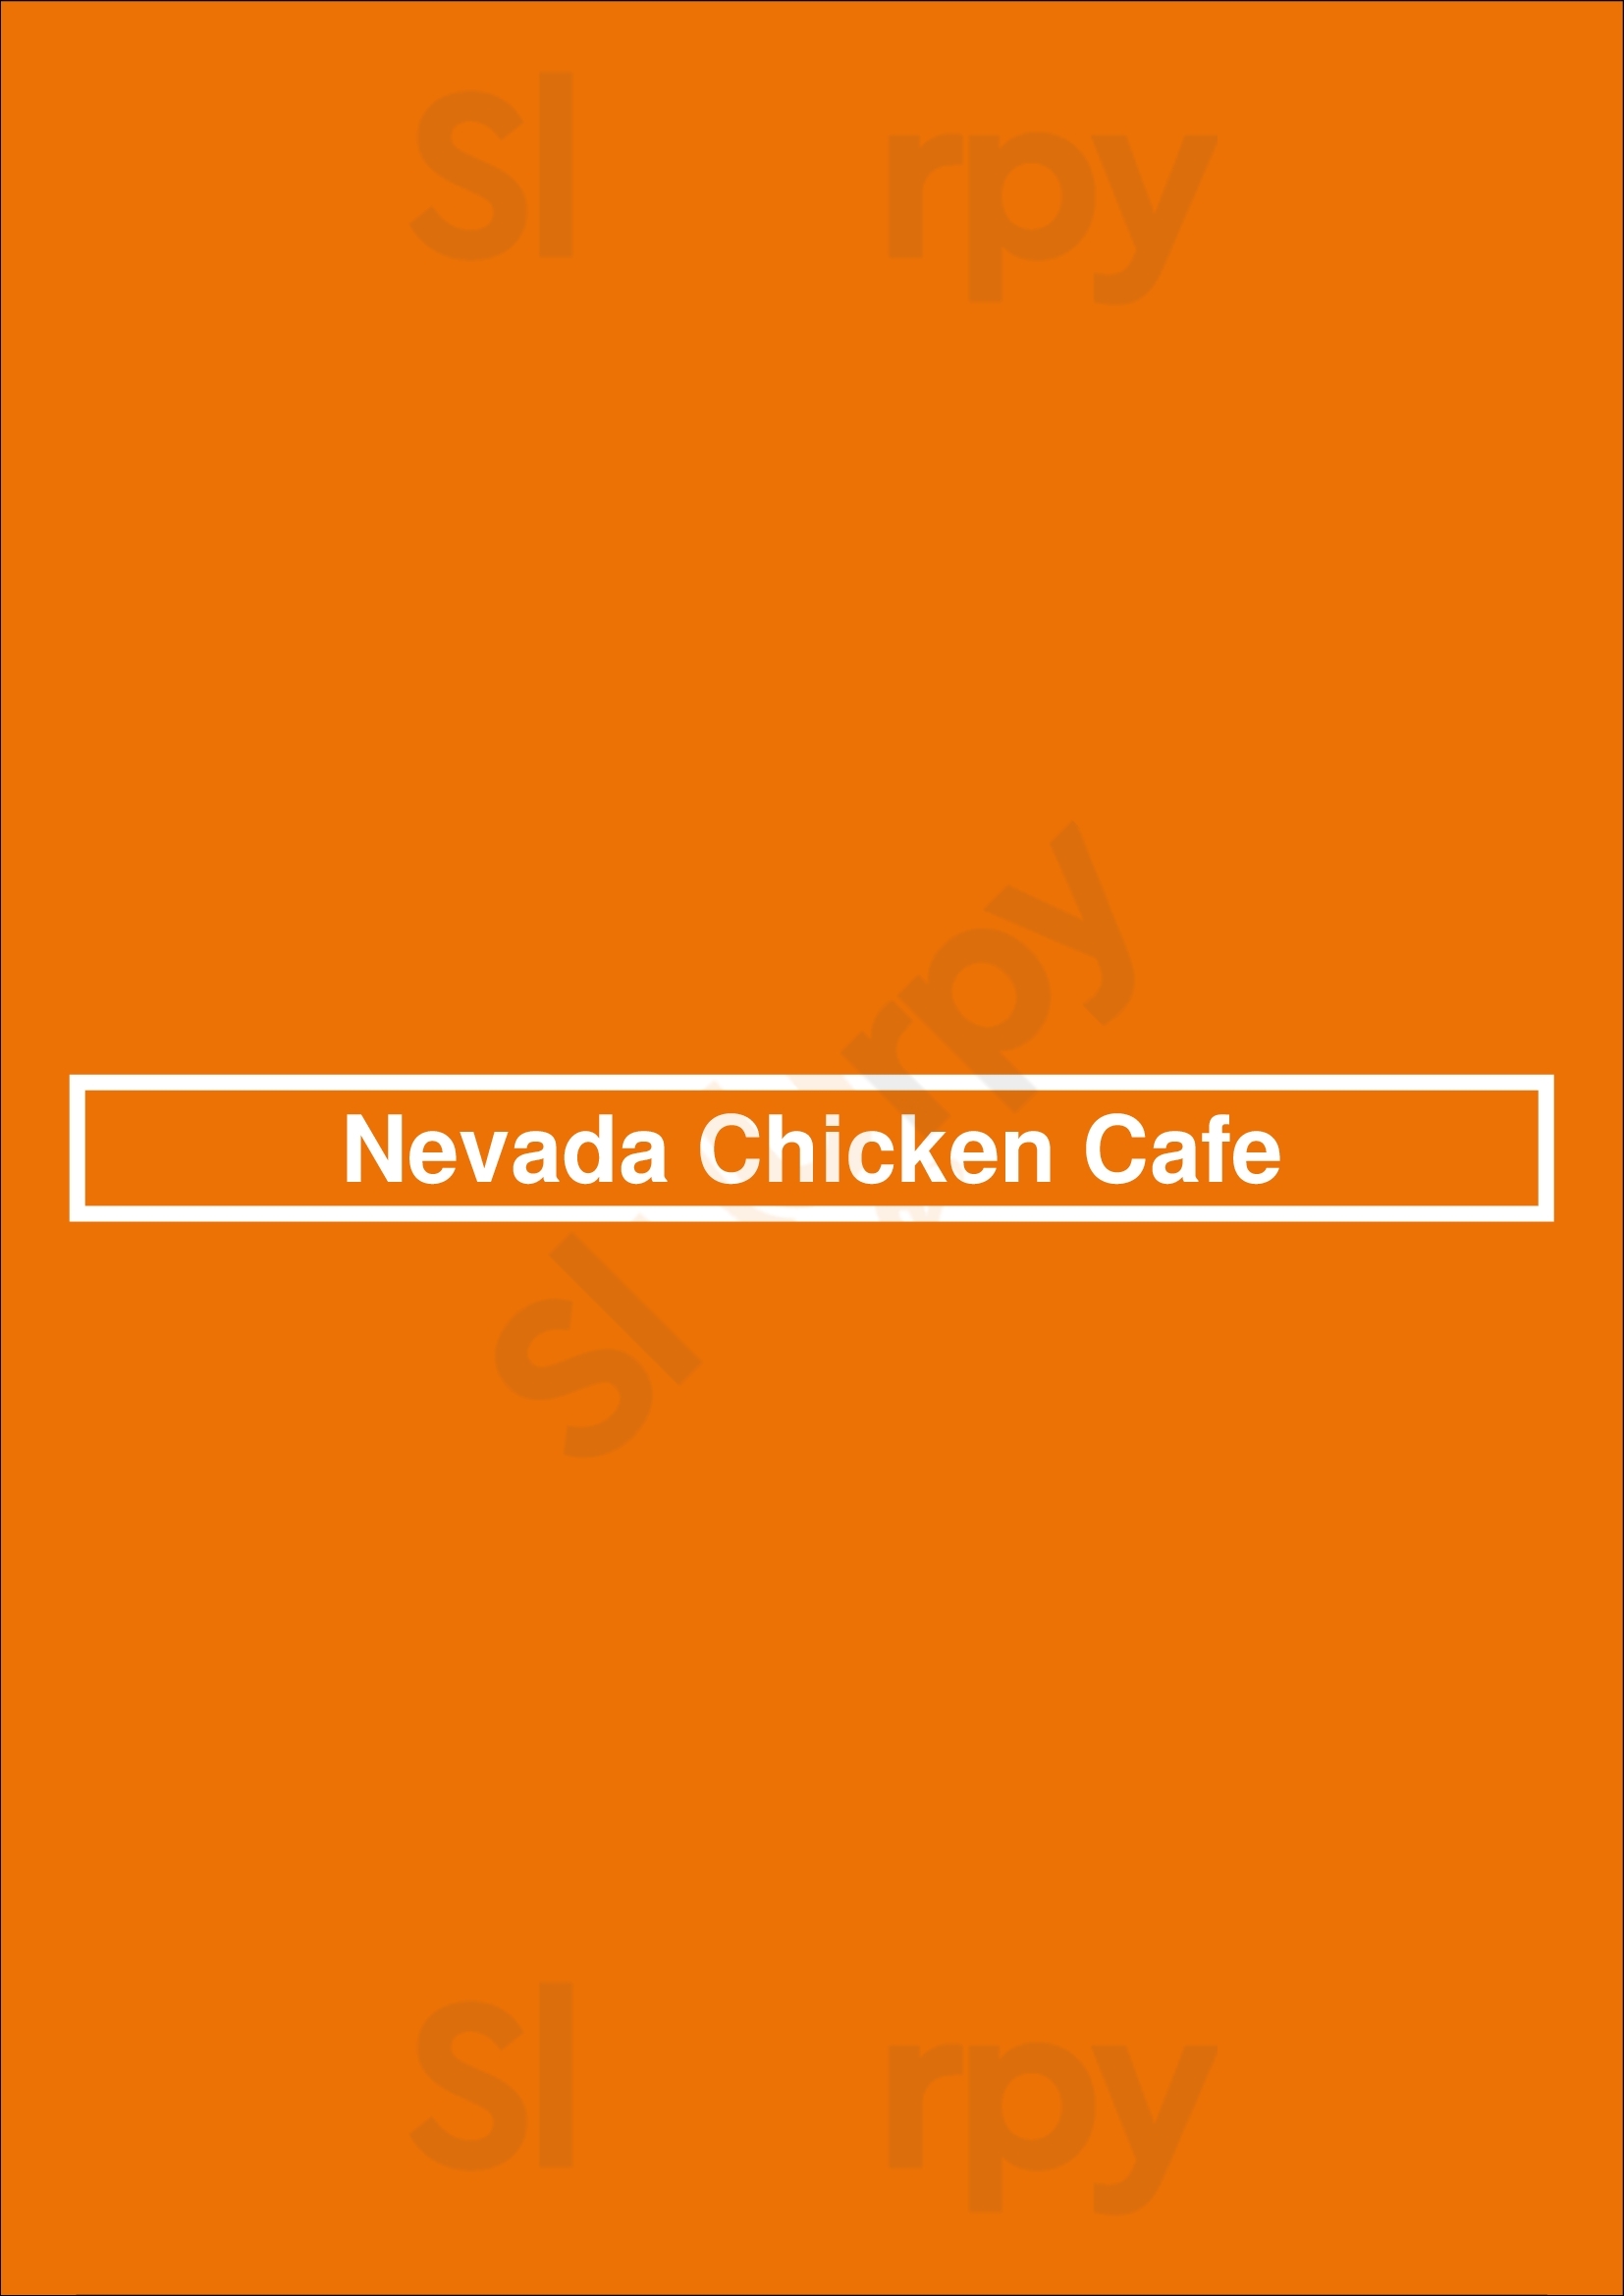 Nevada Chicken Cafe Las Vegas Menu - 1